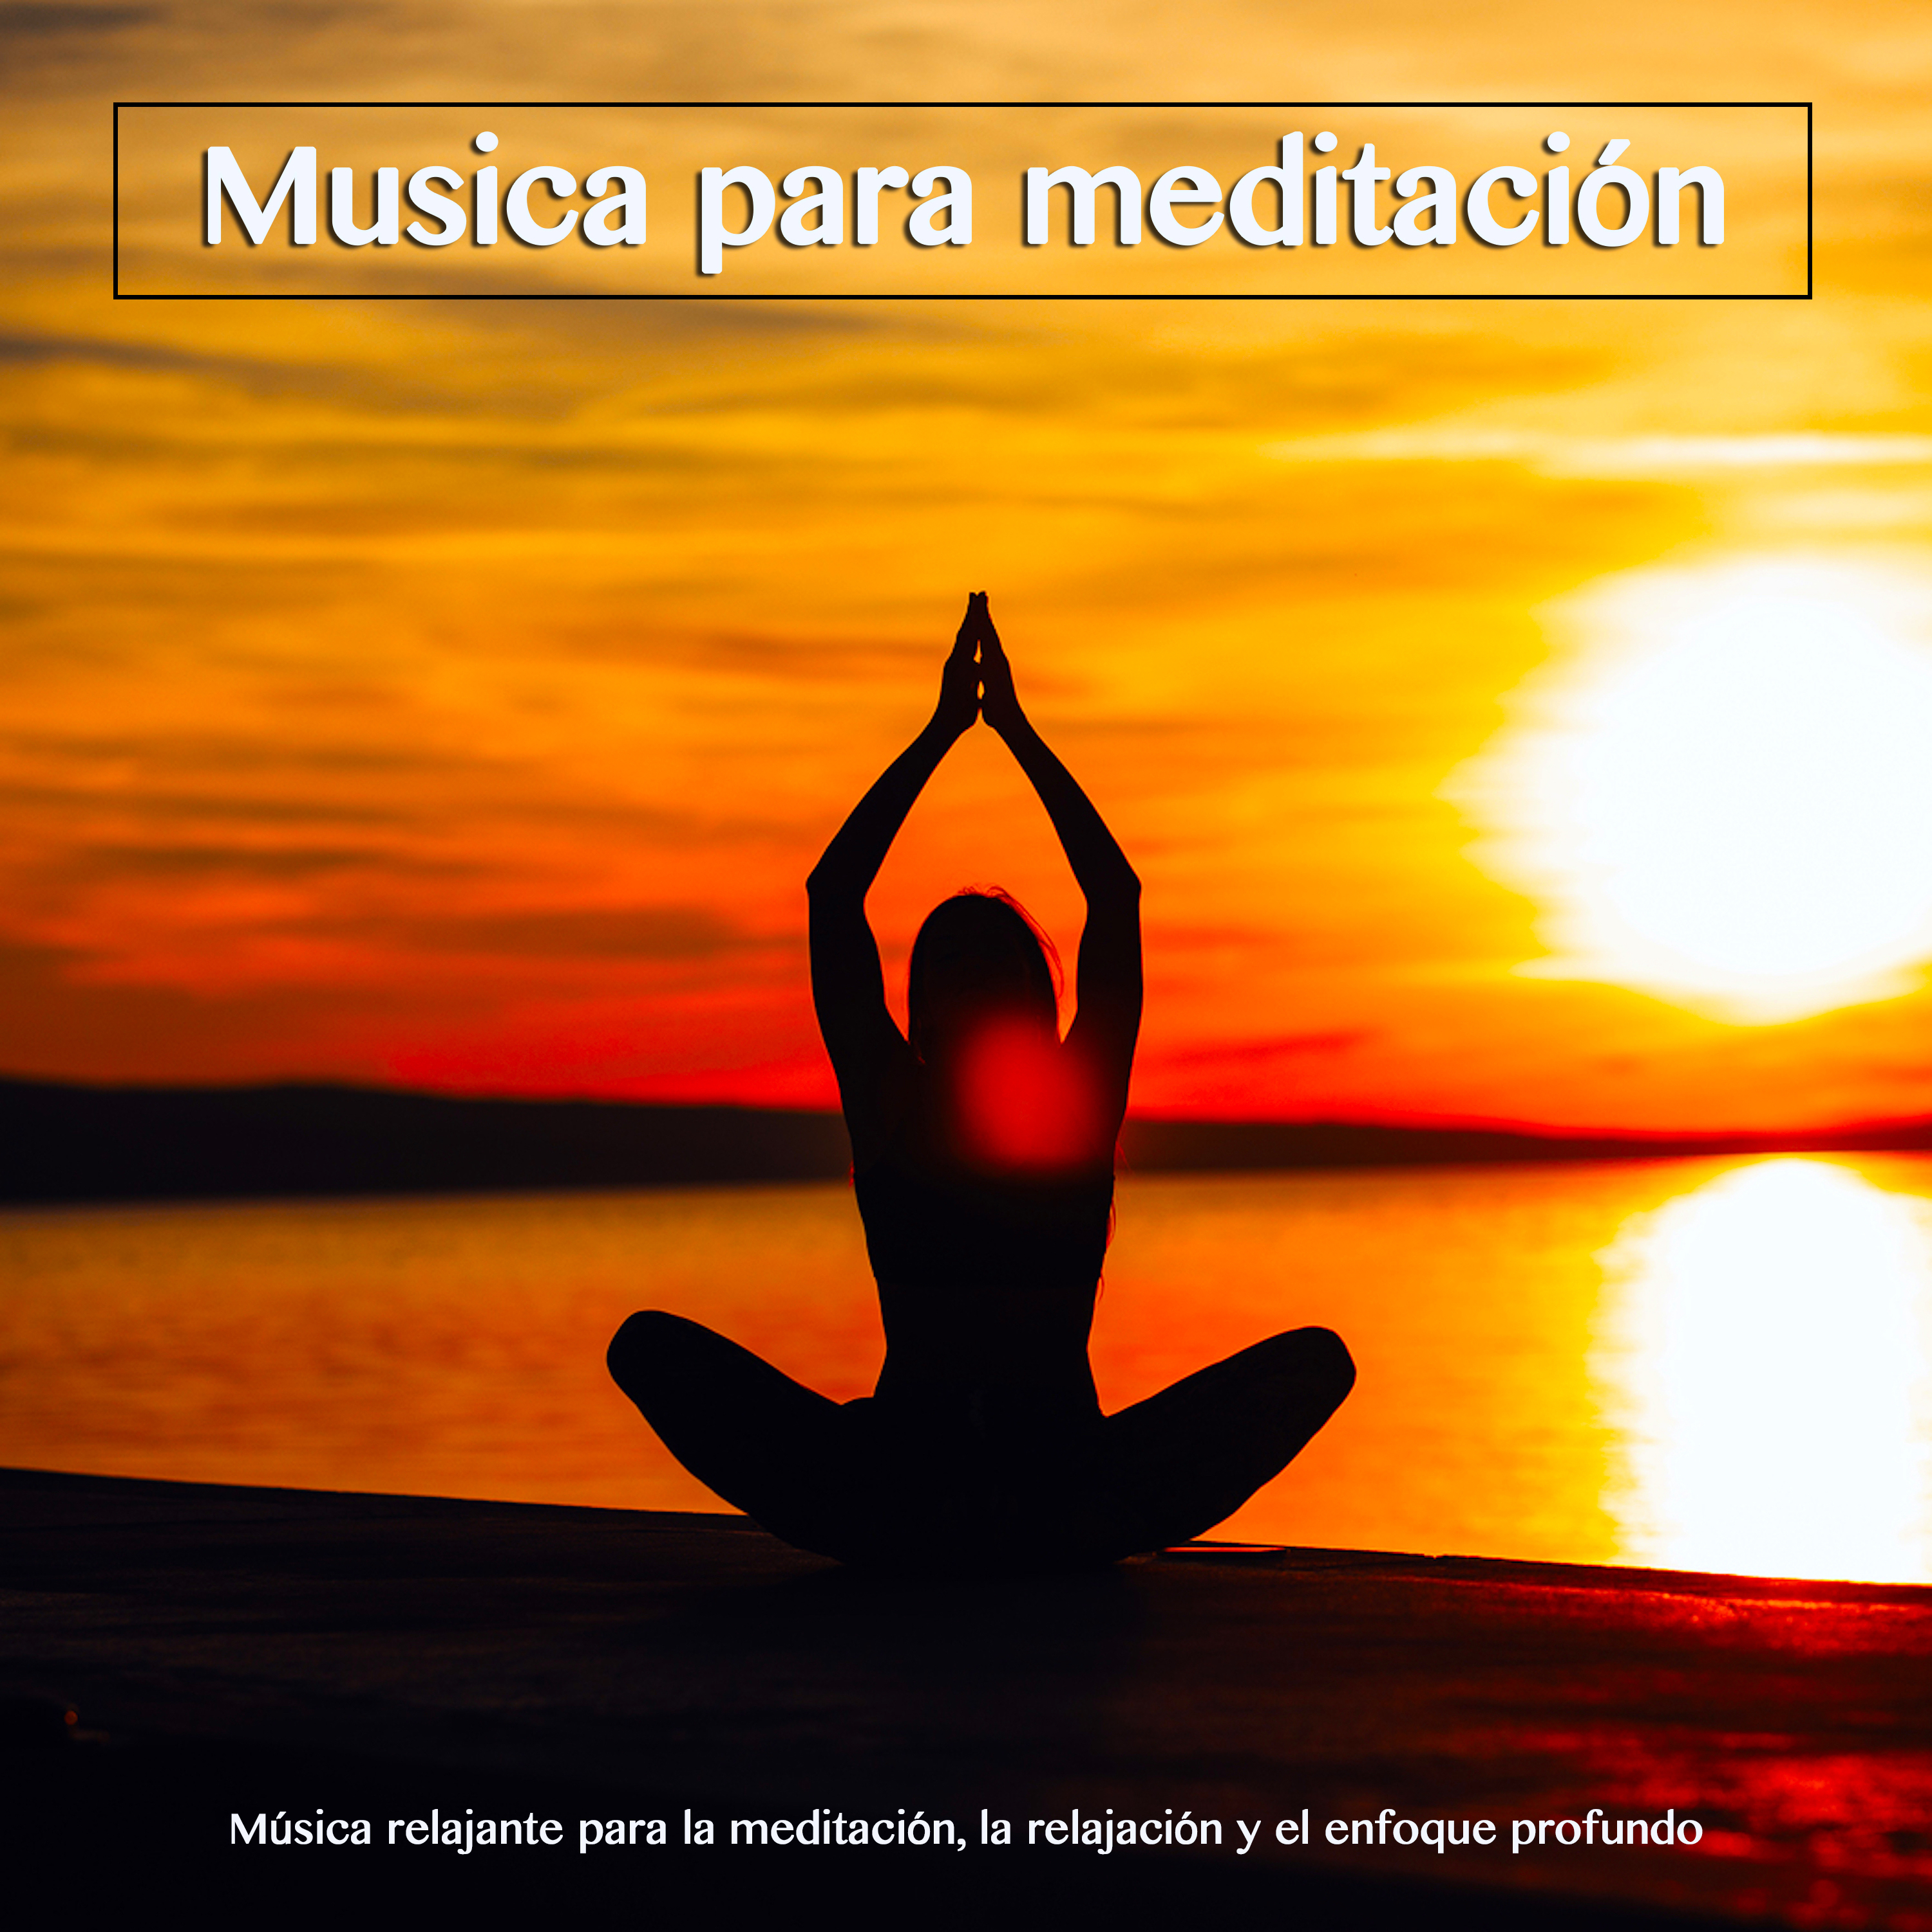 Musica para meditación - Música tranquila